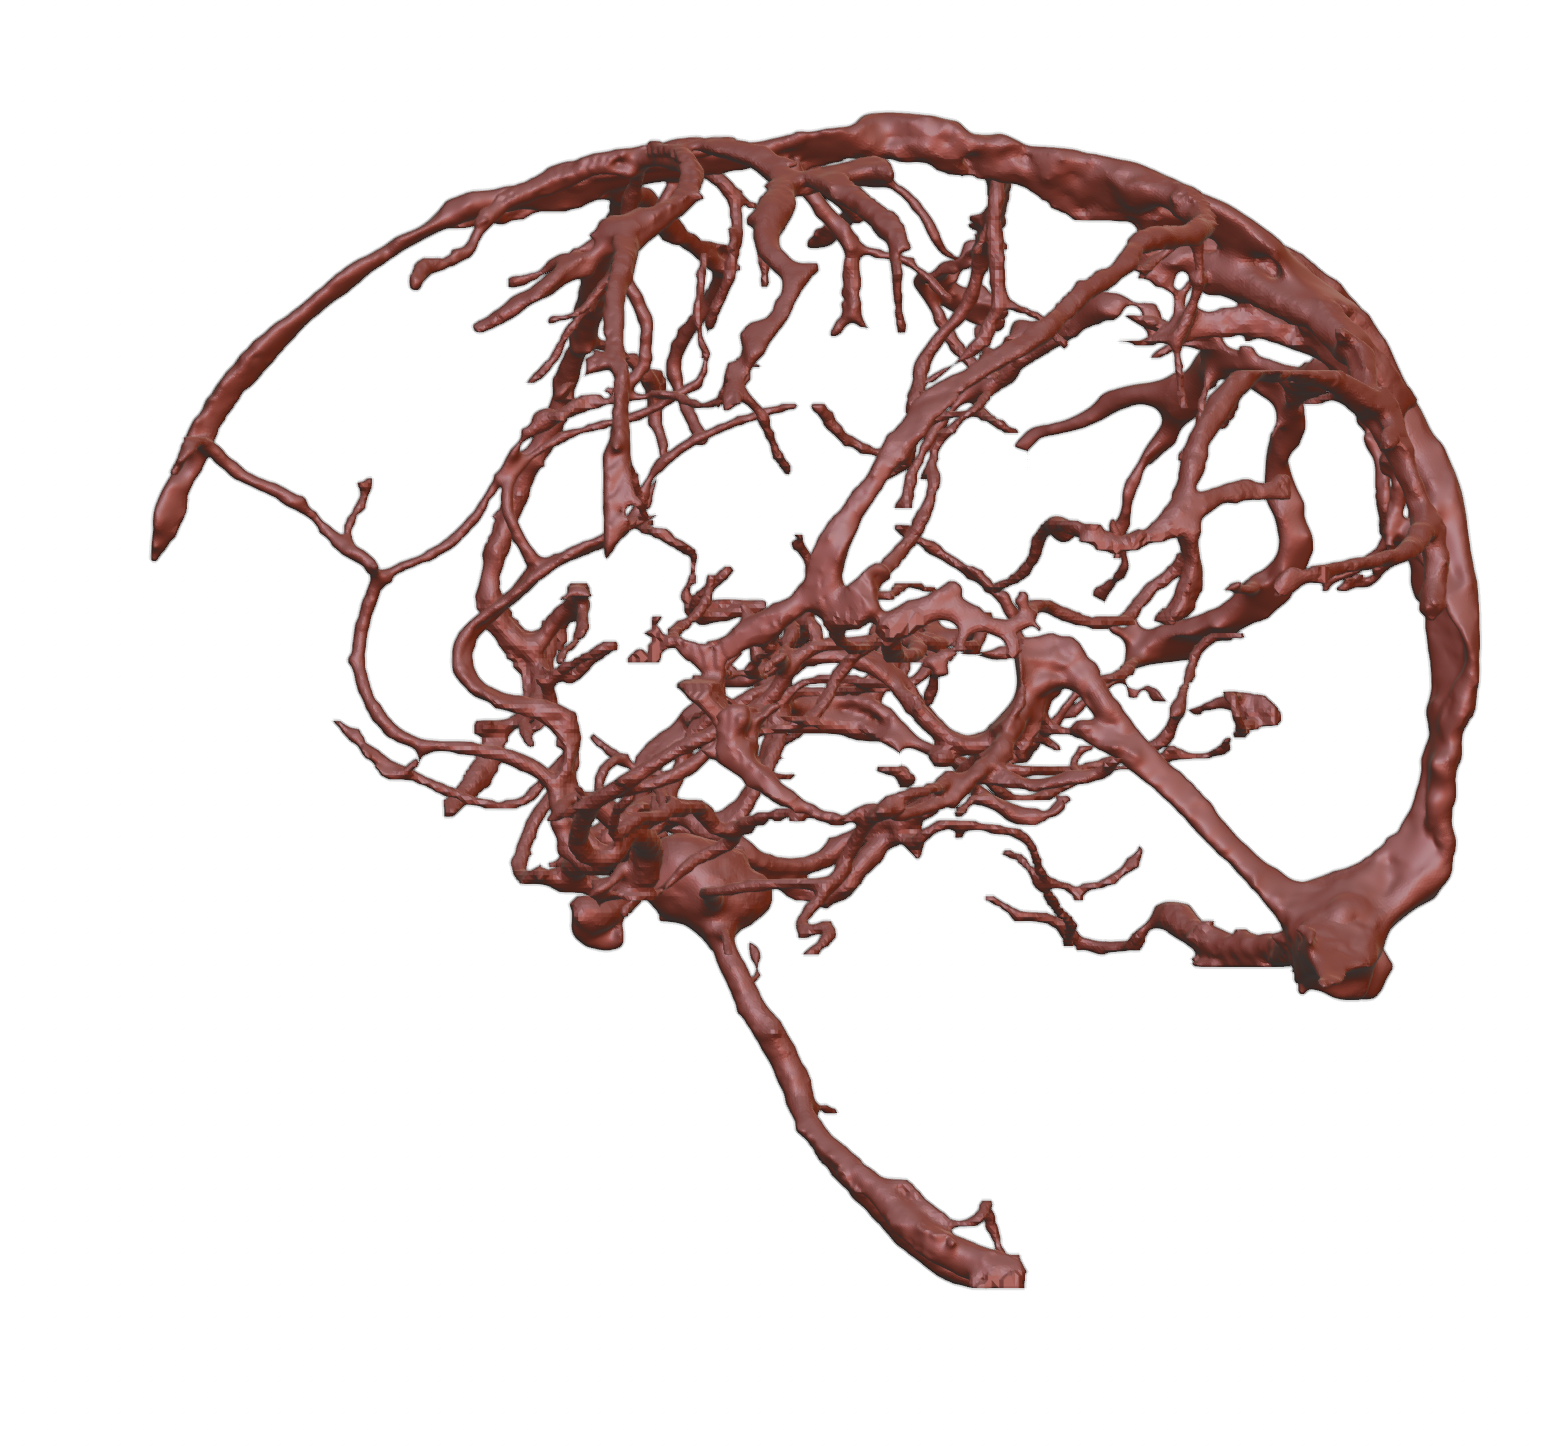 Brain arteries with aneurysm